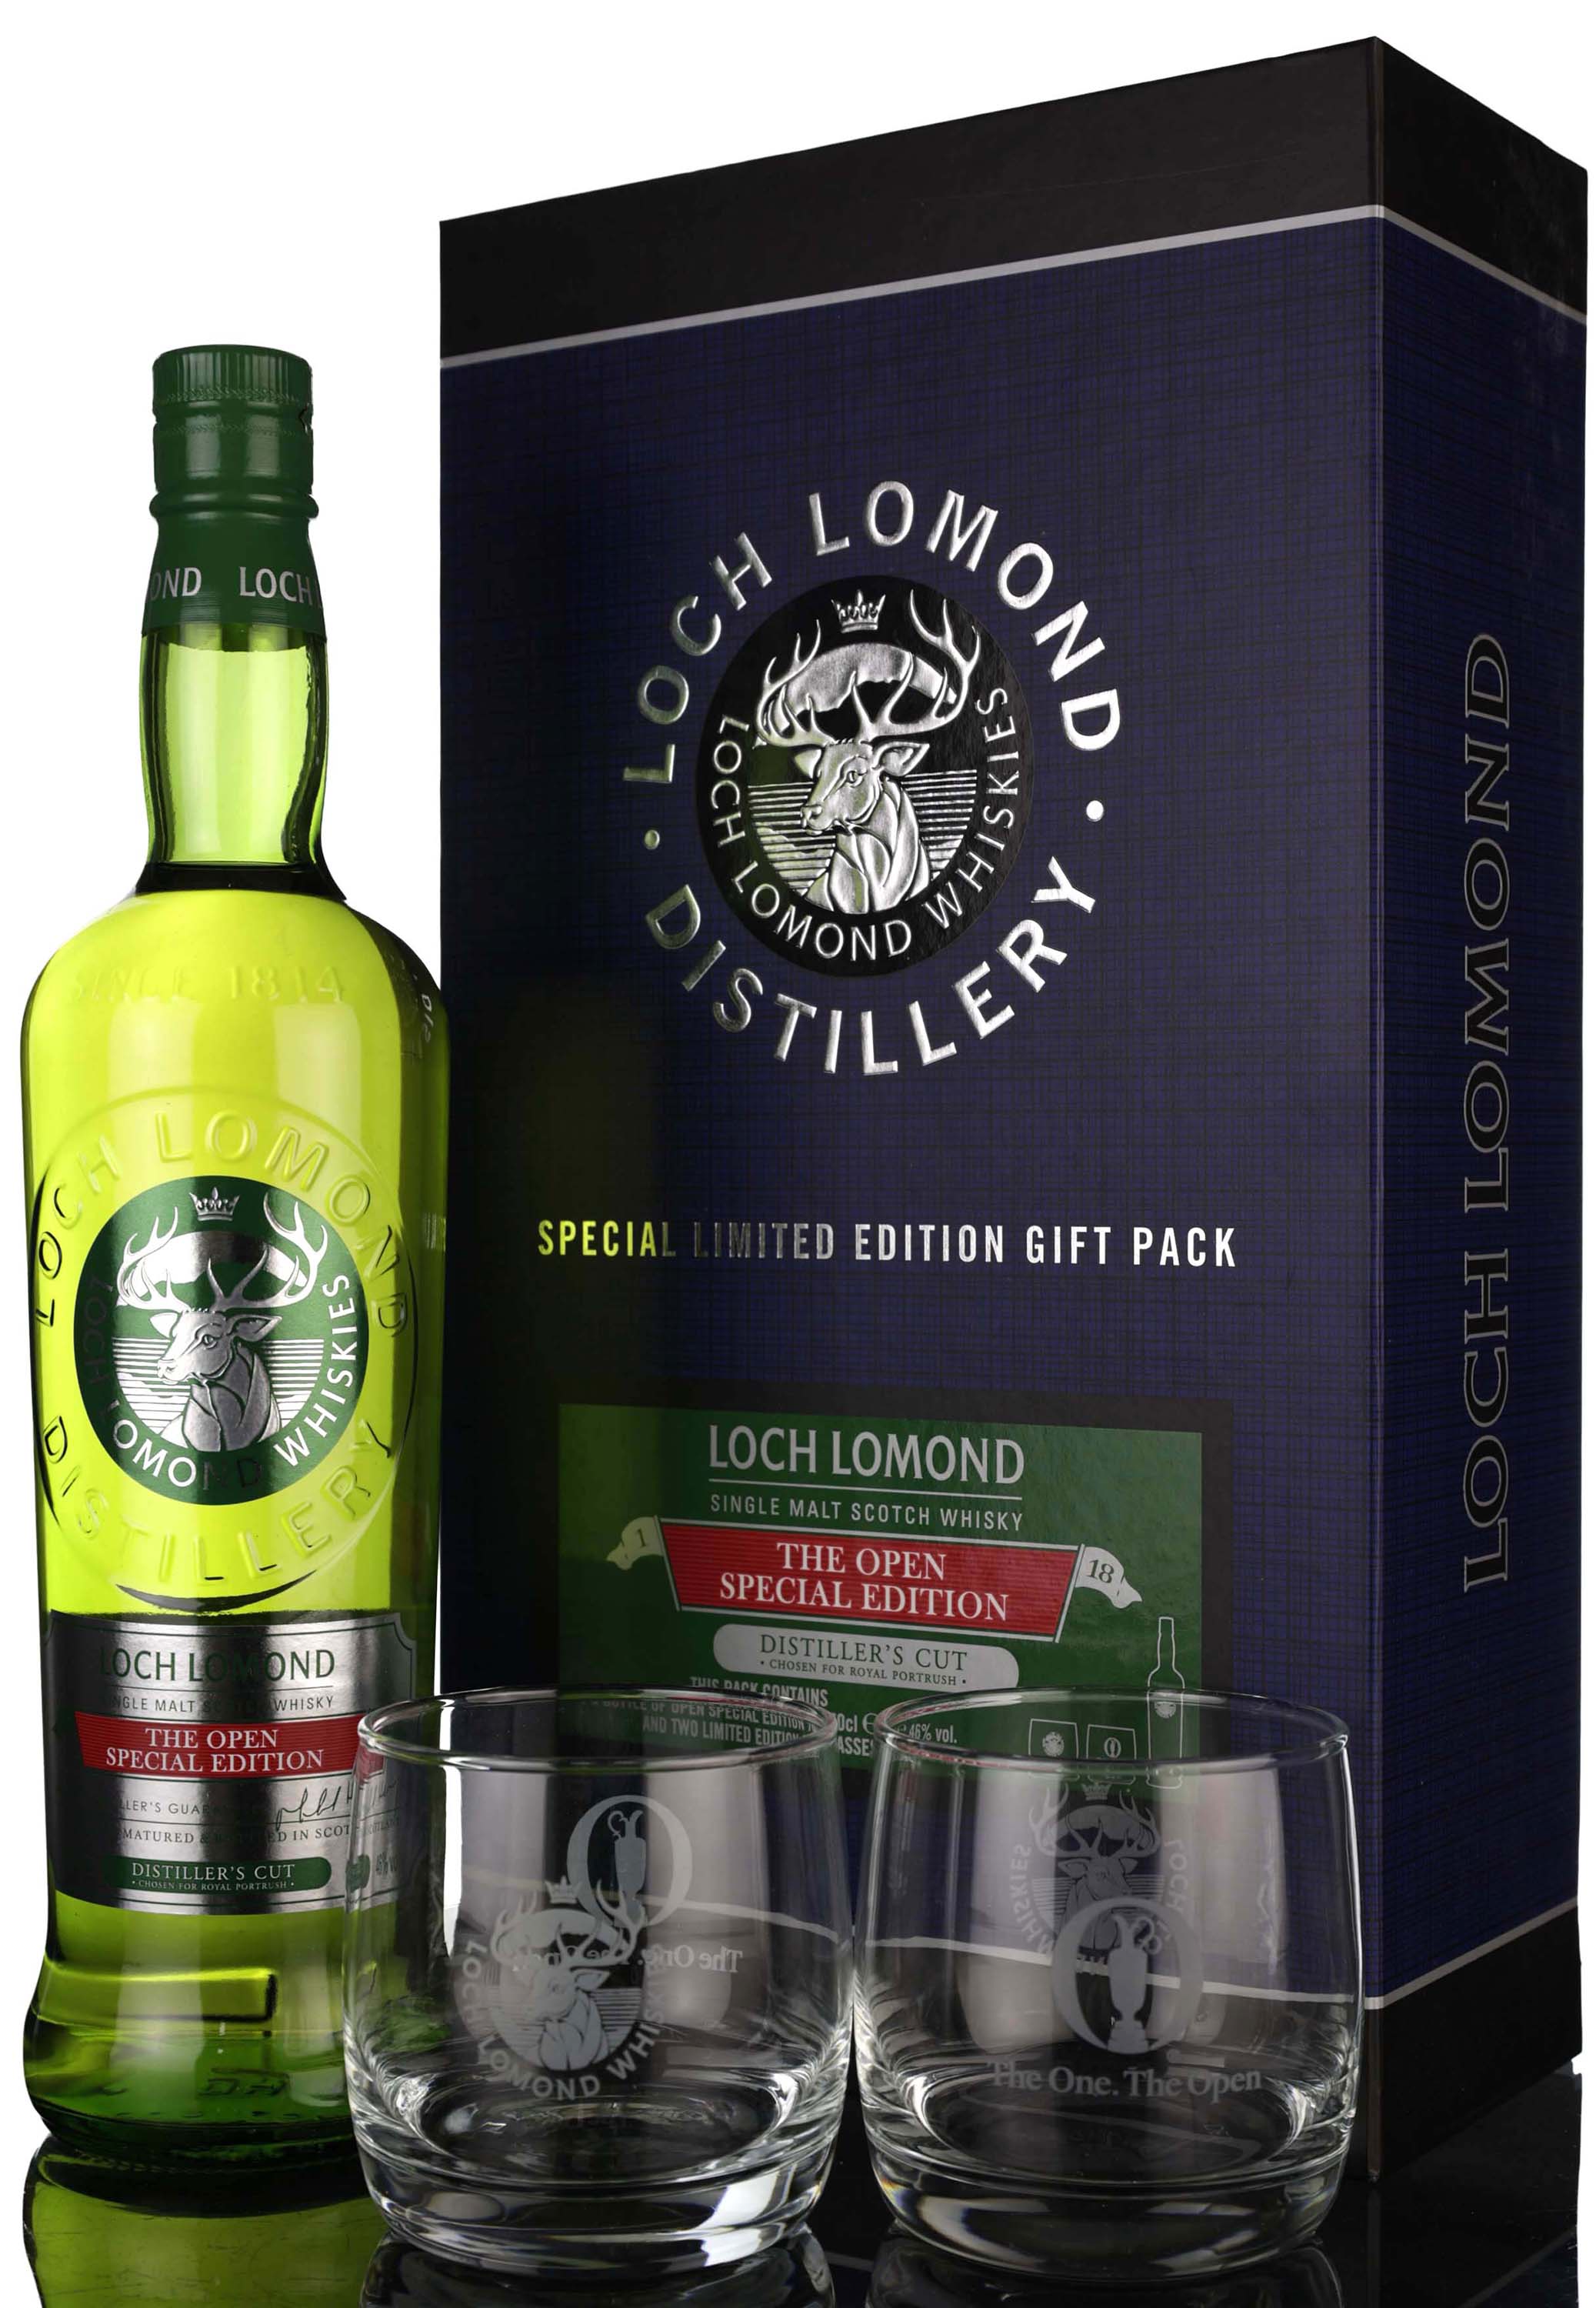 Loch Lomond Distillers Cut - The Open Special Edition Royal Portrush 2019 - Presentation S